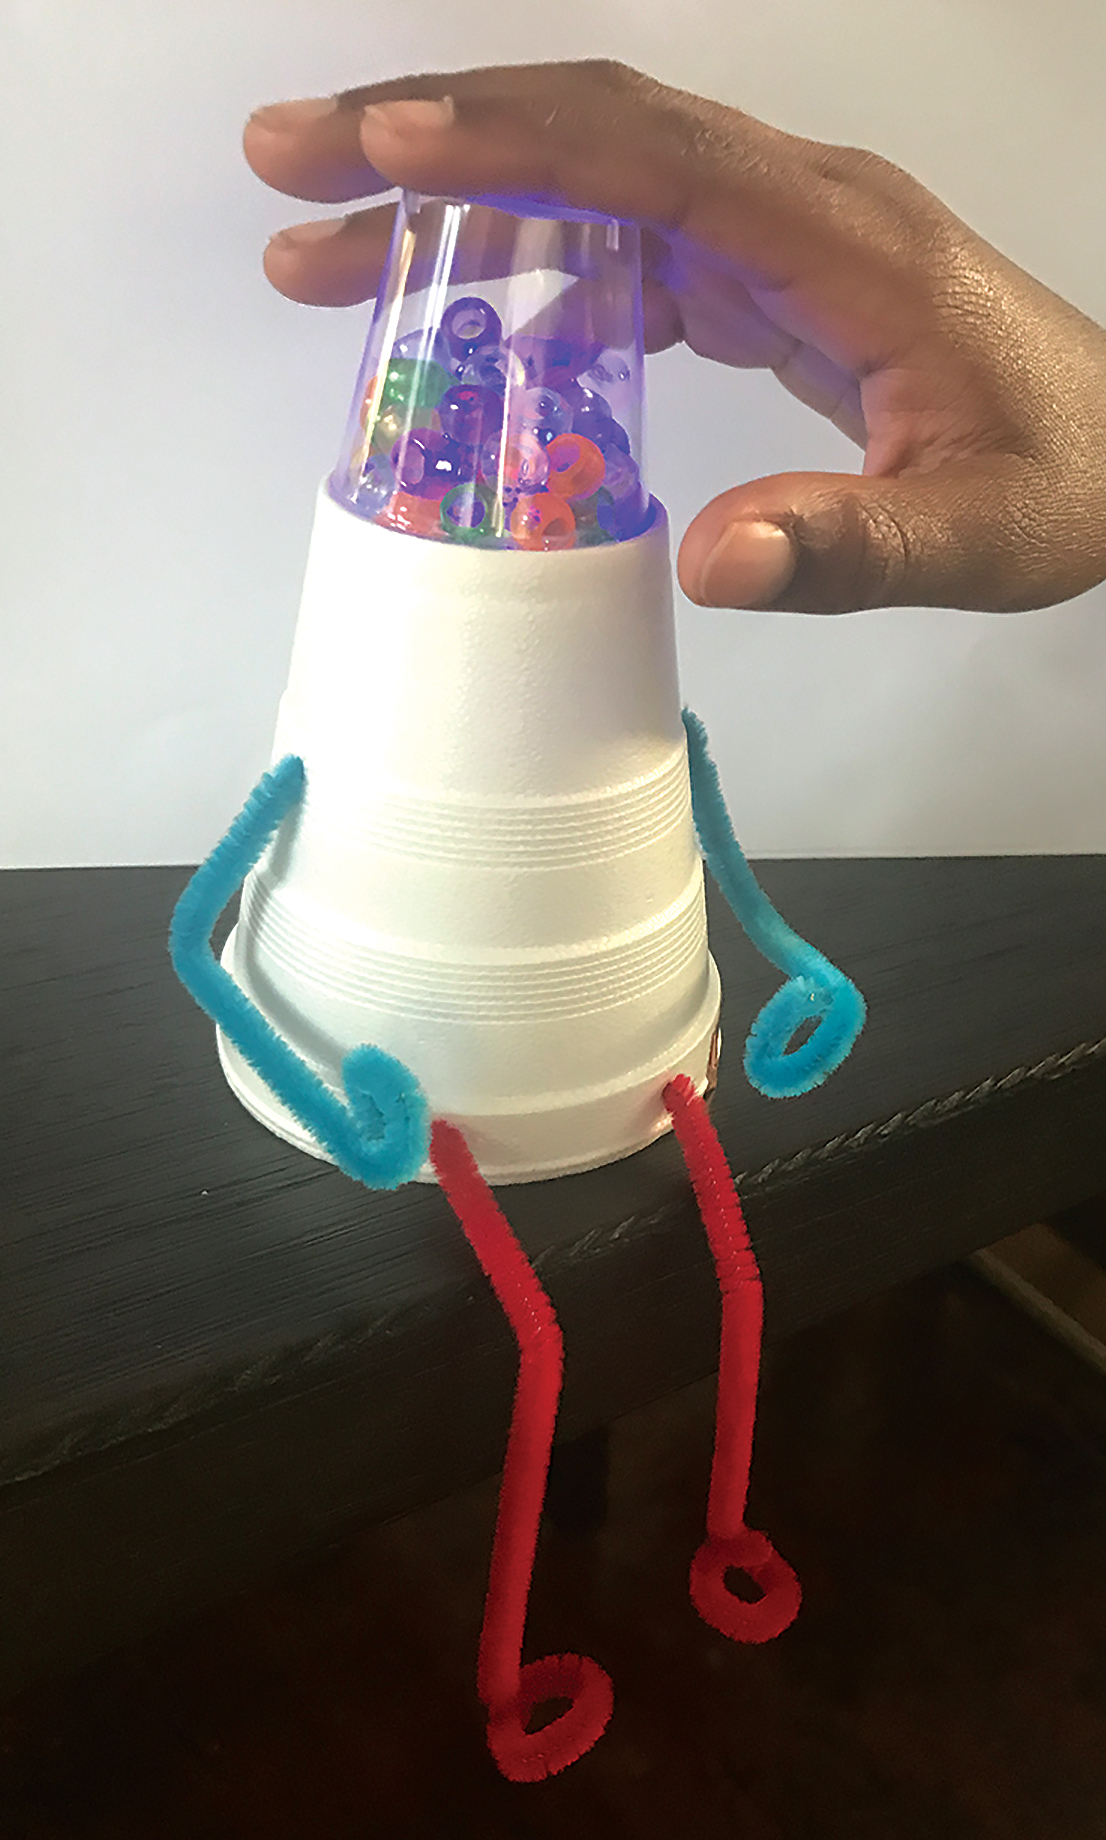 A Styrofoam cup robot ready for service.